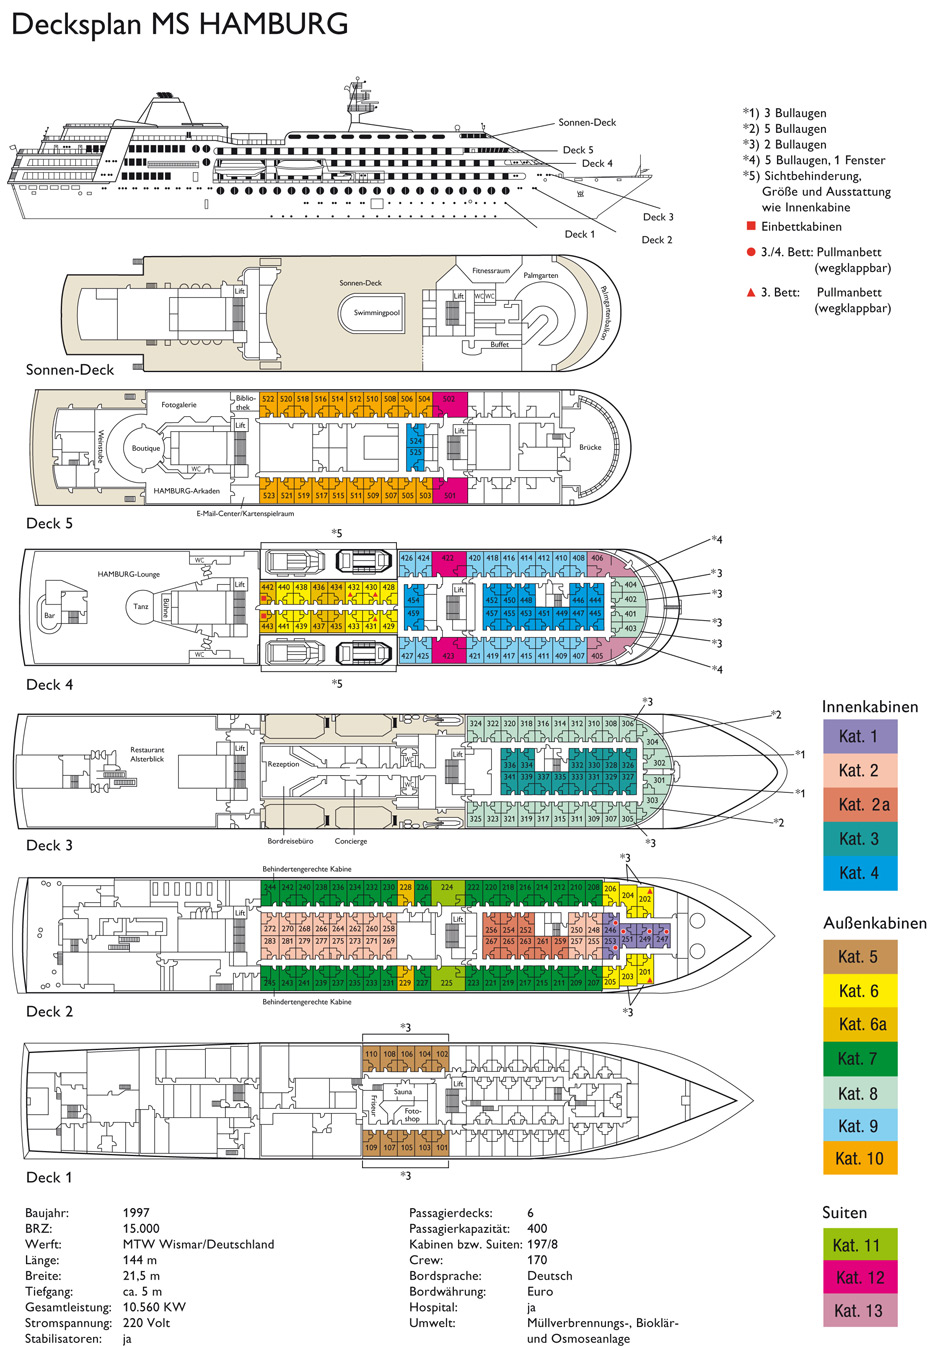 MS Hamburg Decksplan